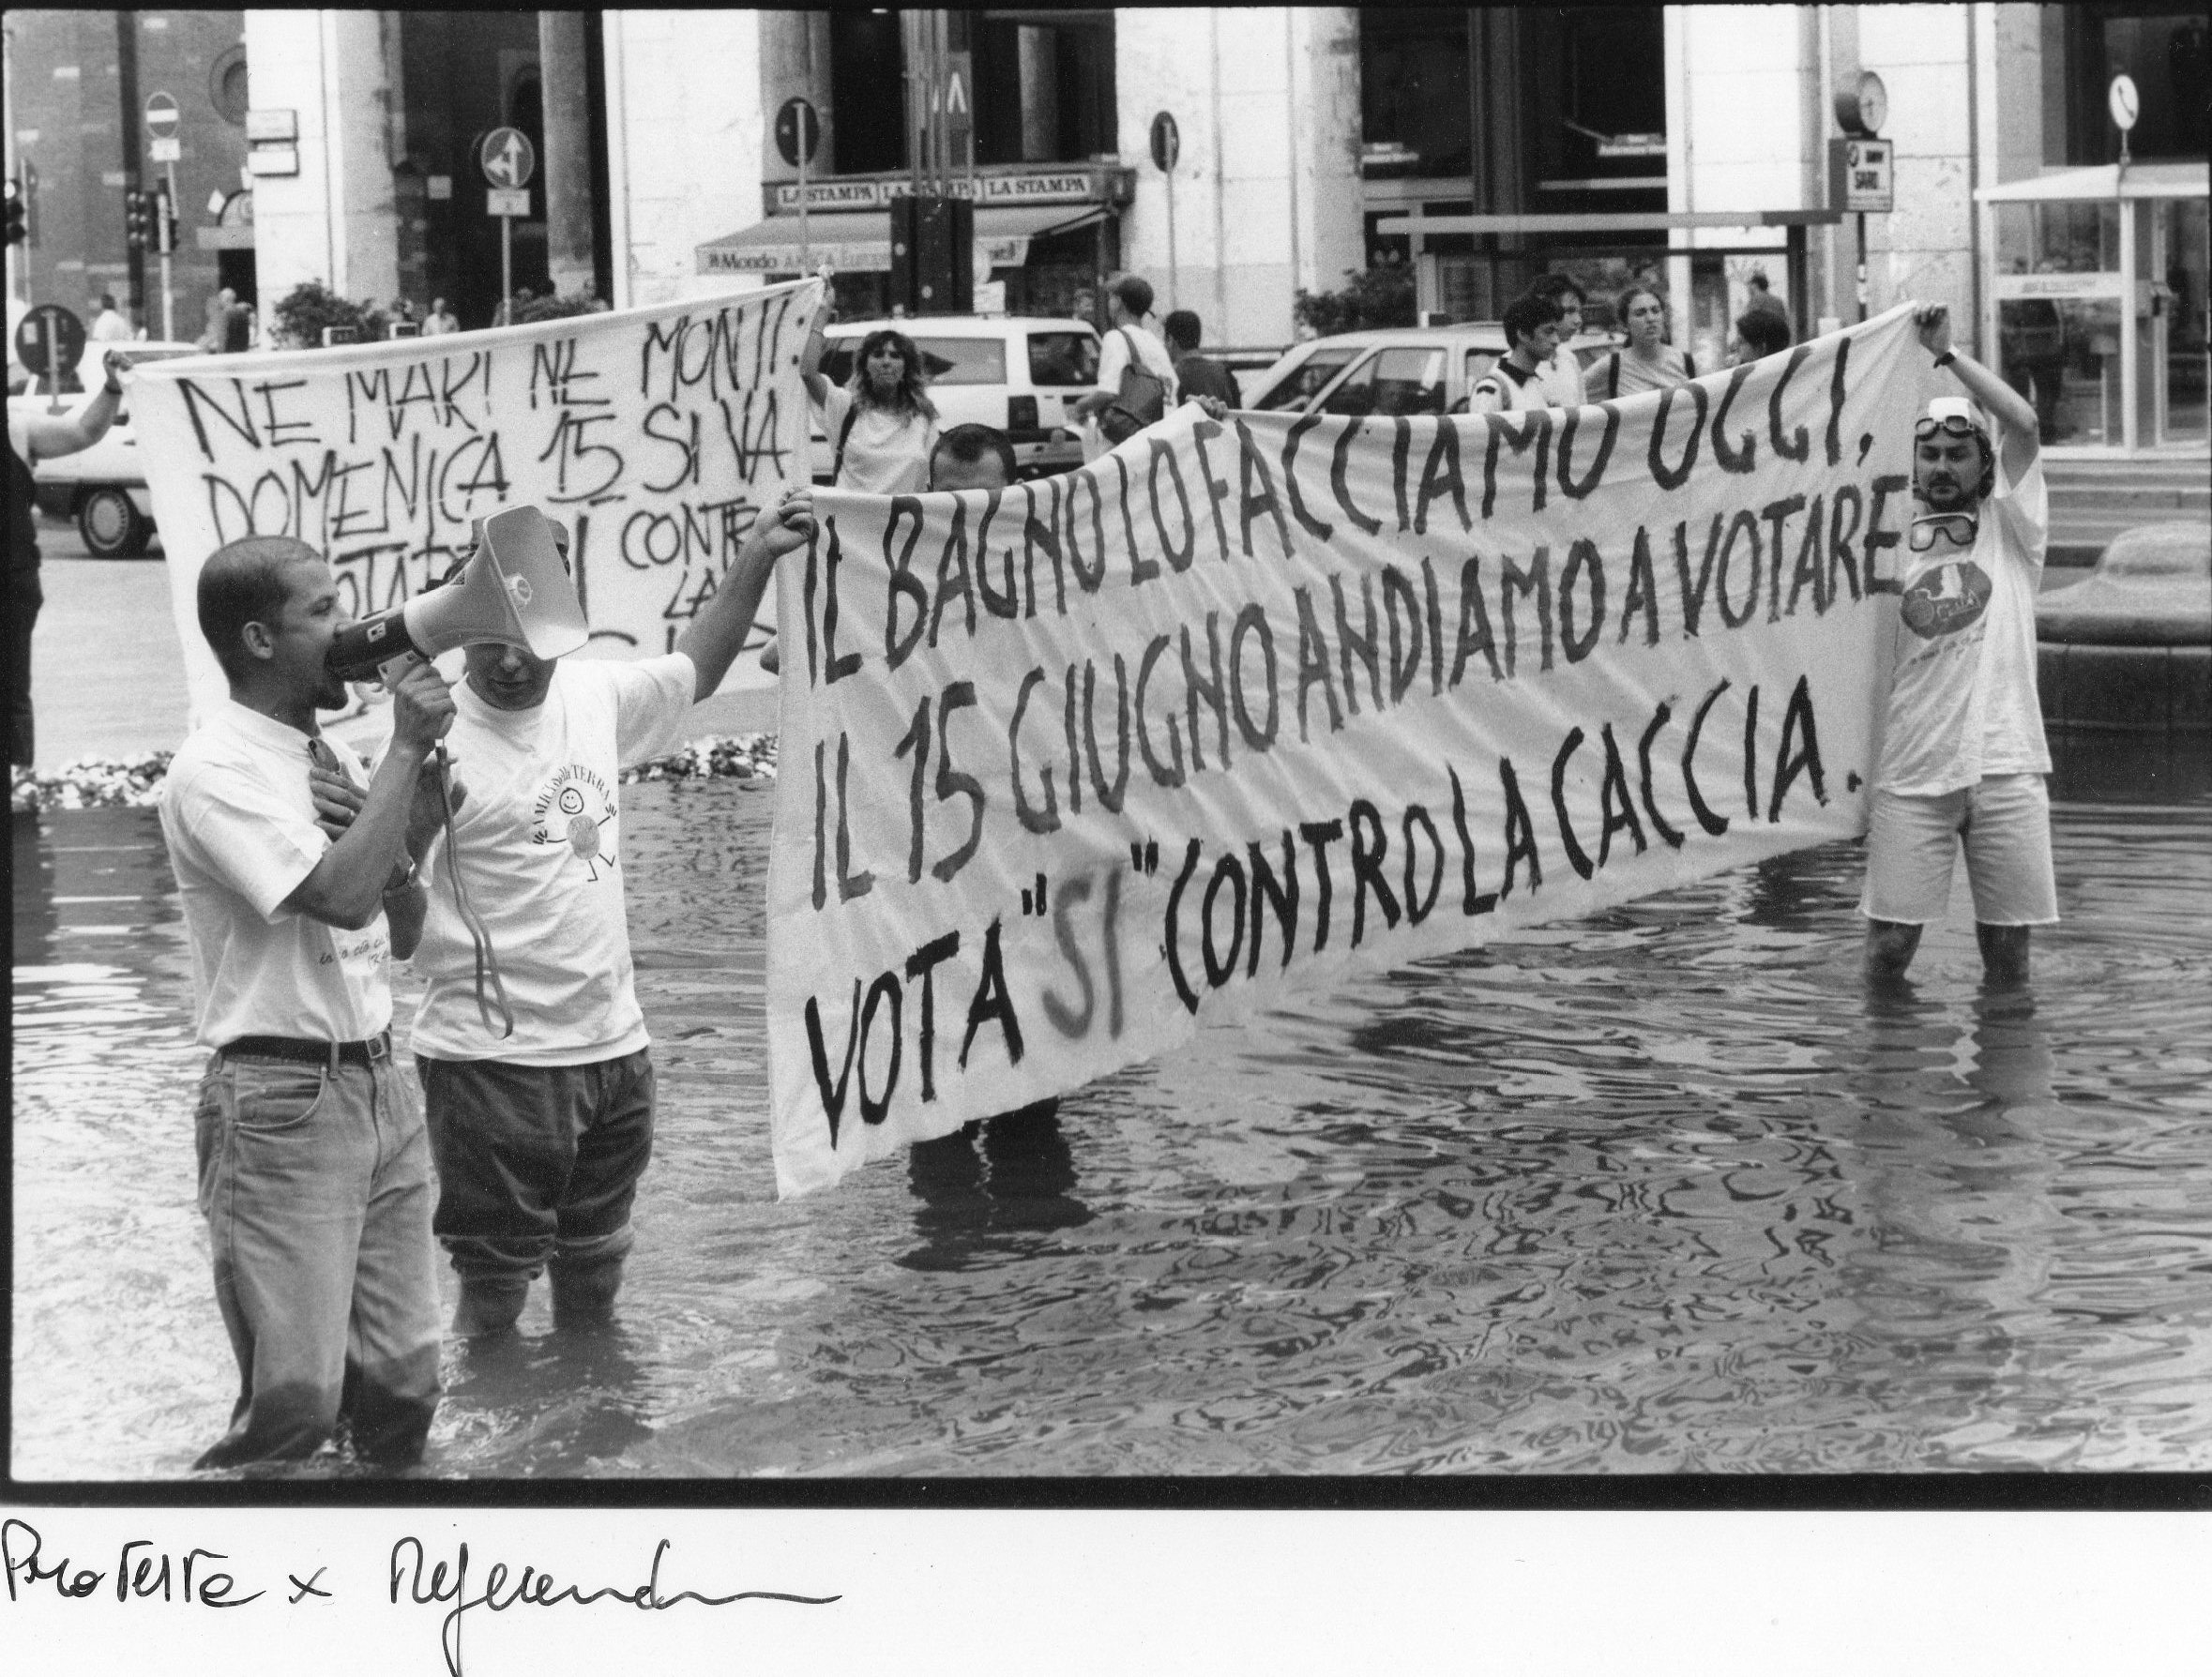 history bagno s. babila x referendum vs caccia 2